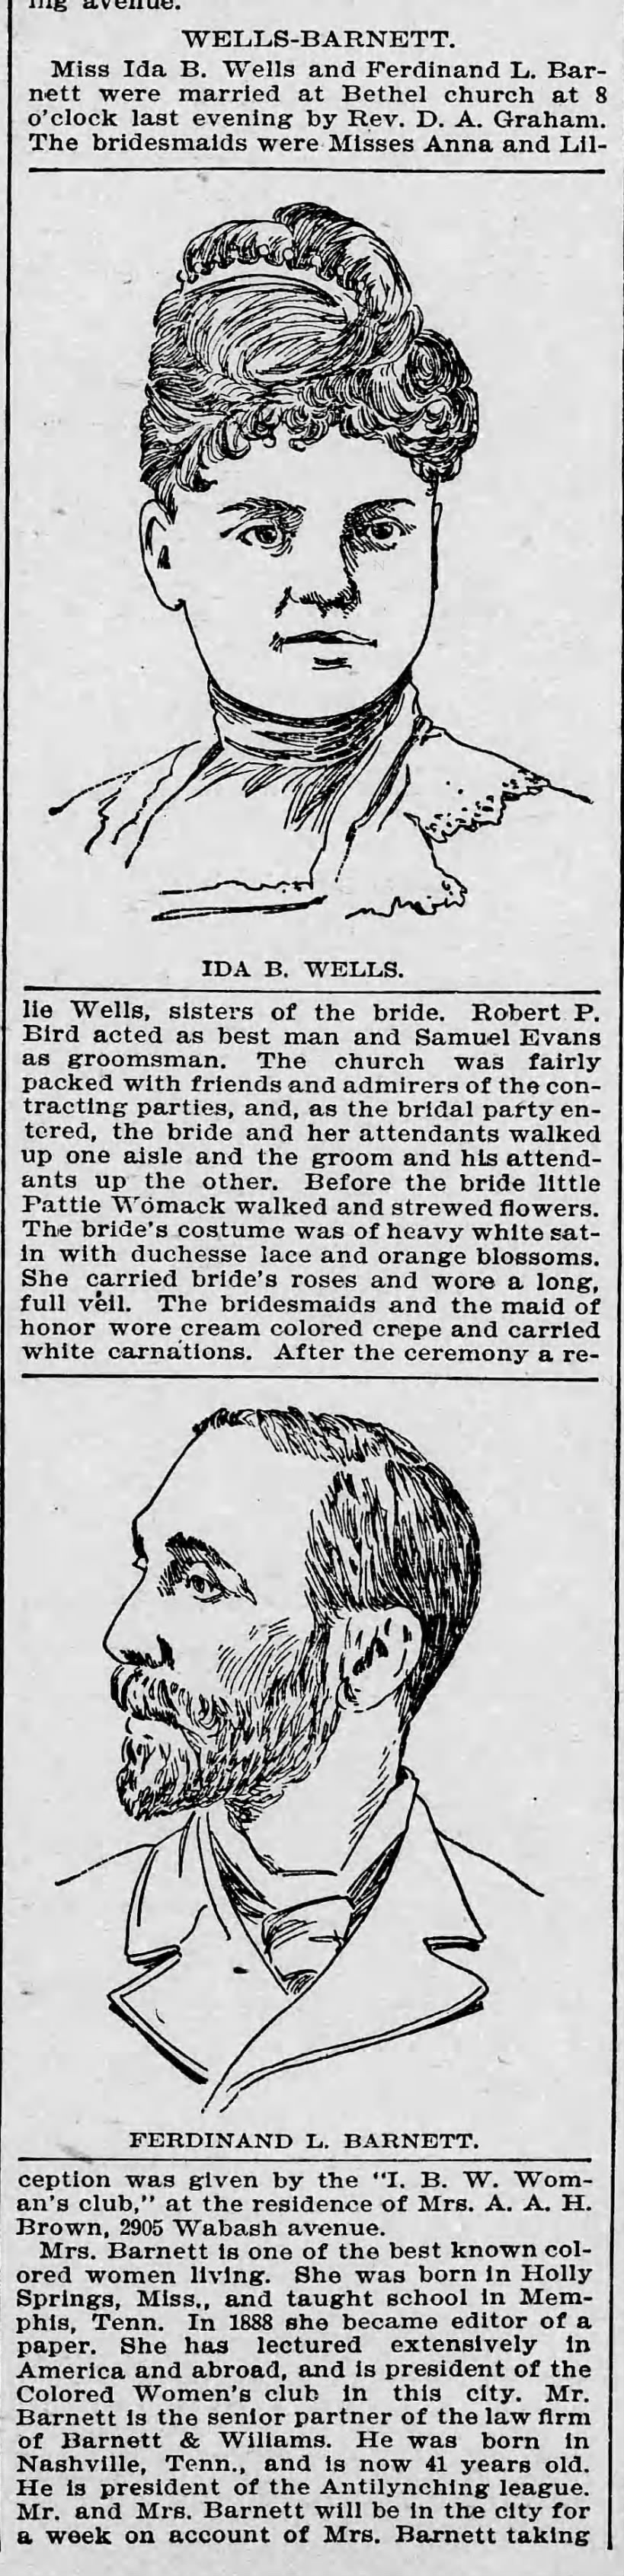 Marriage of Ida B. Wells to Ferdinand L. Barnett, including description of wedding ceremony, 1895